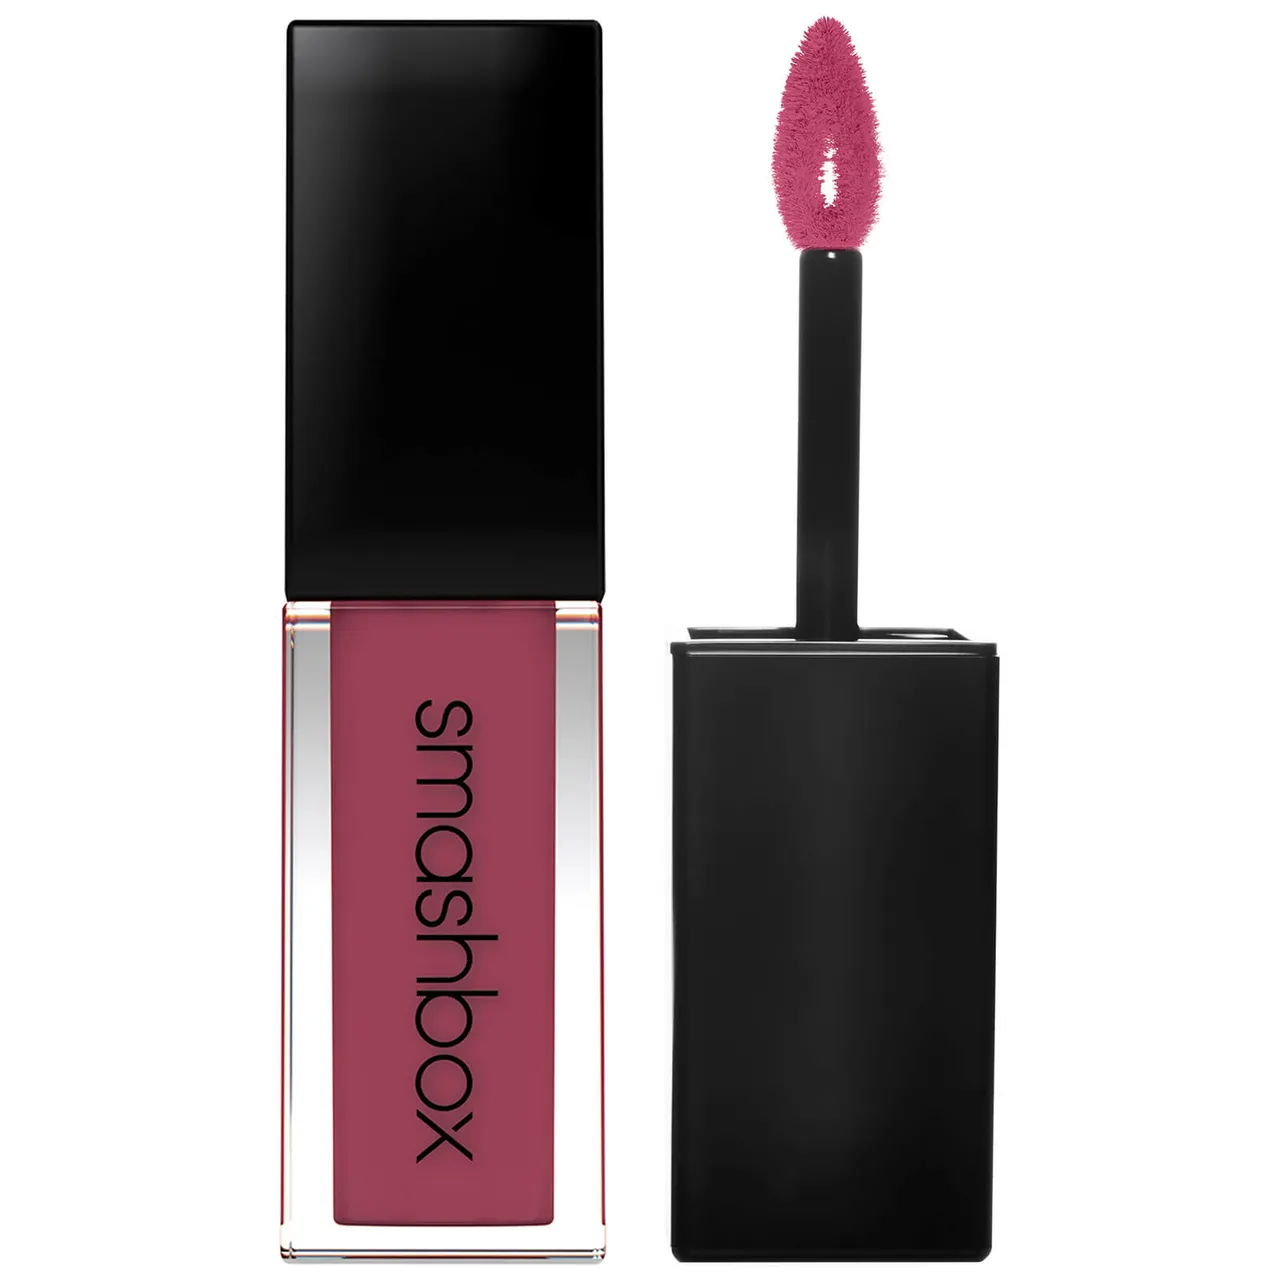 Smashbox Always On Metallic Liquid Lipstick (Various Shades) - Big Spender (Rose)